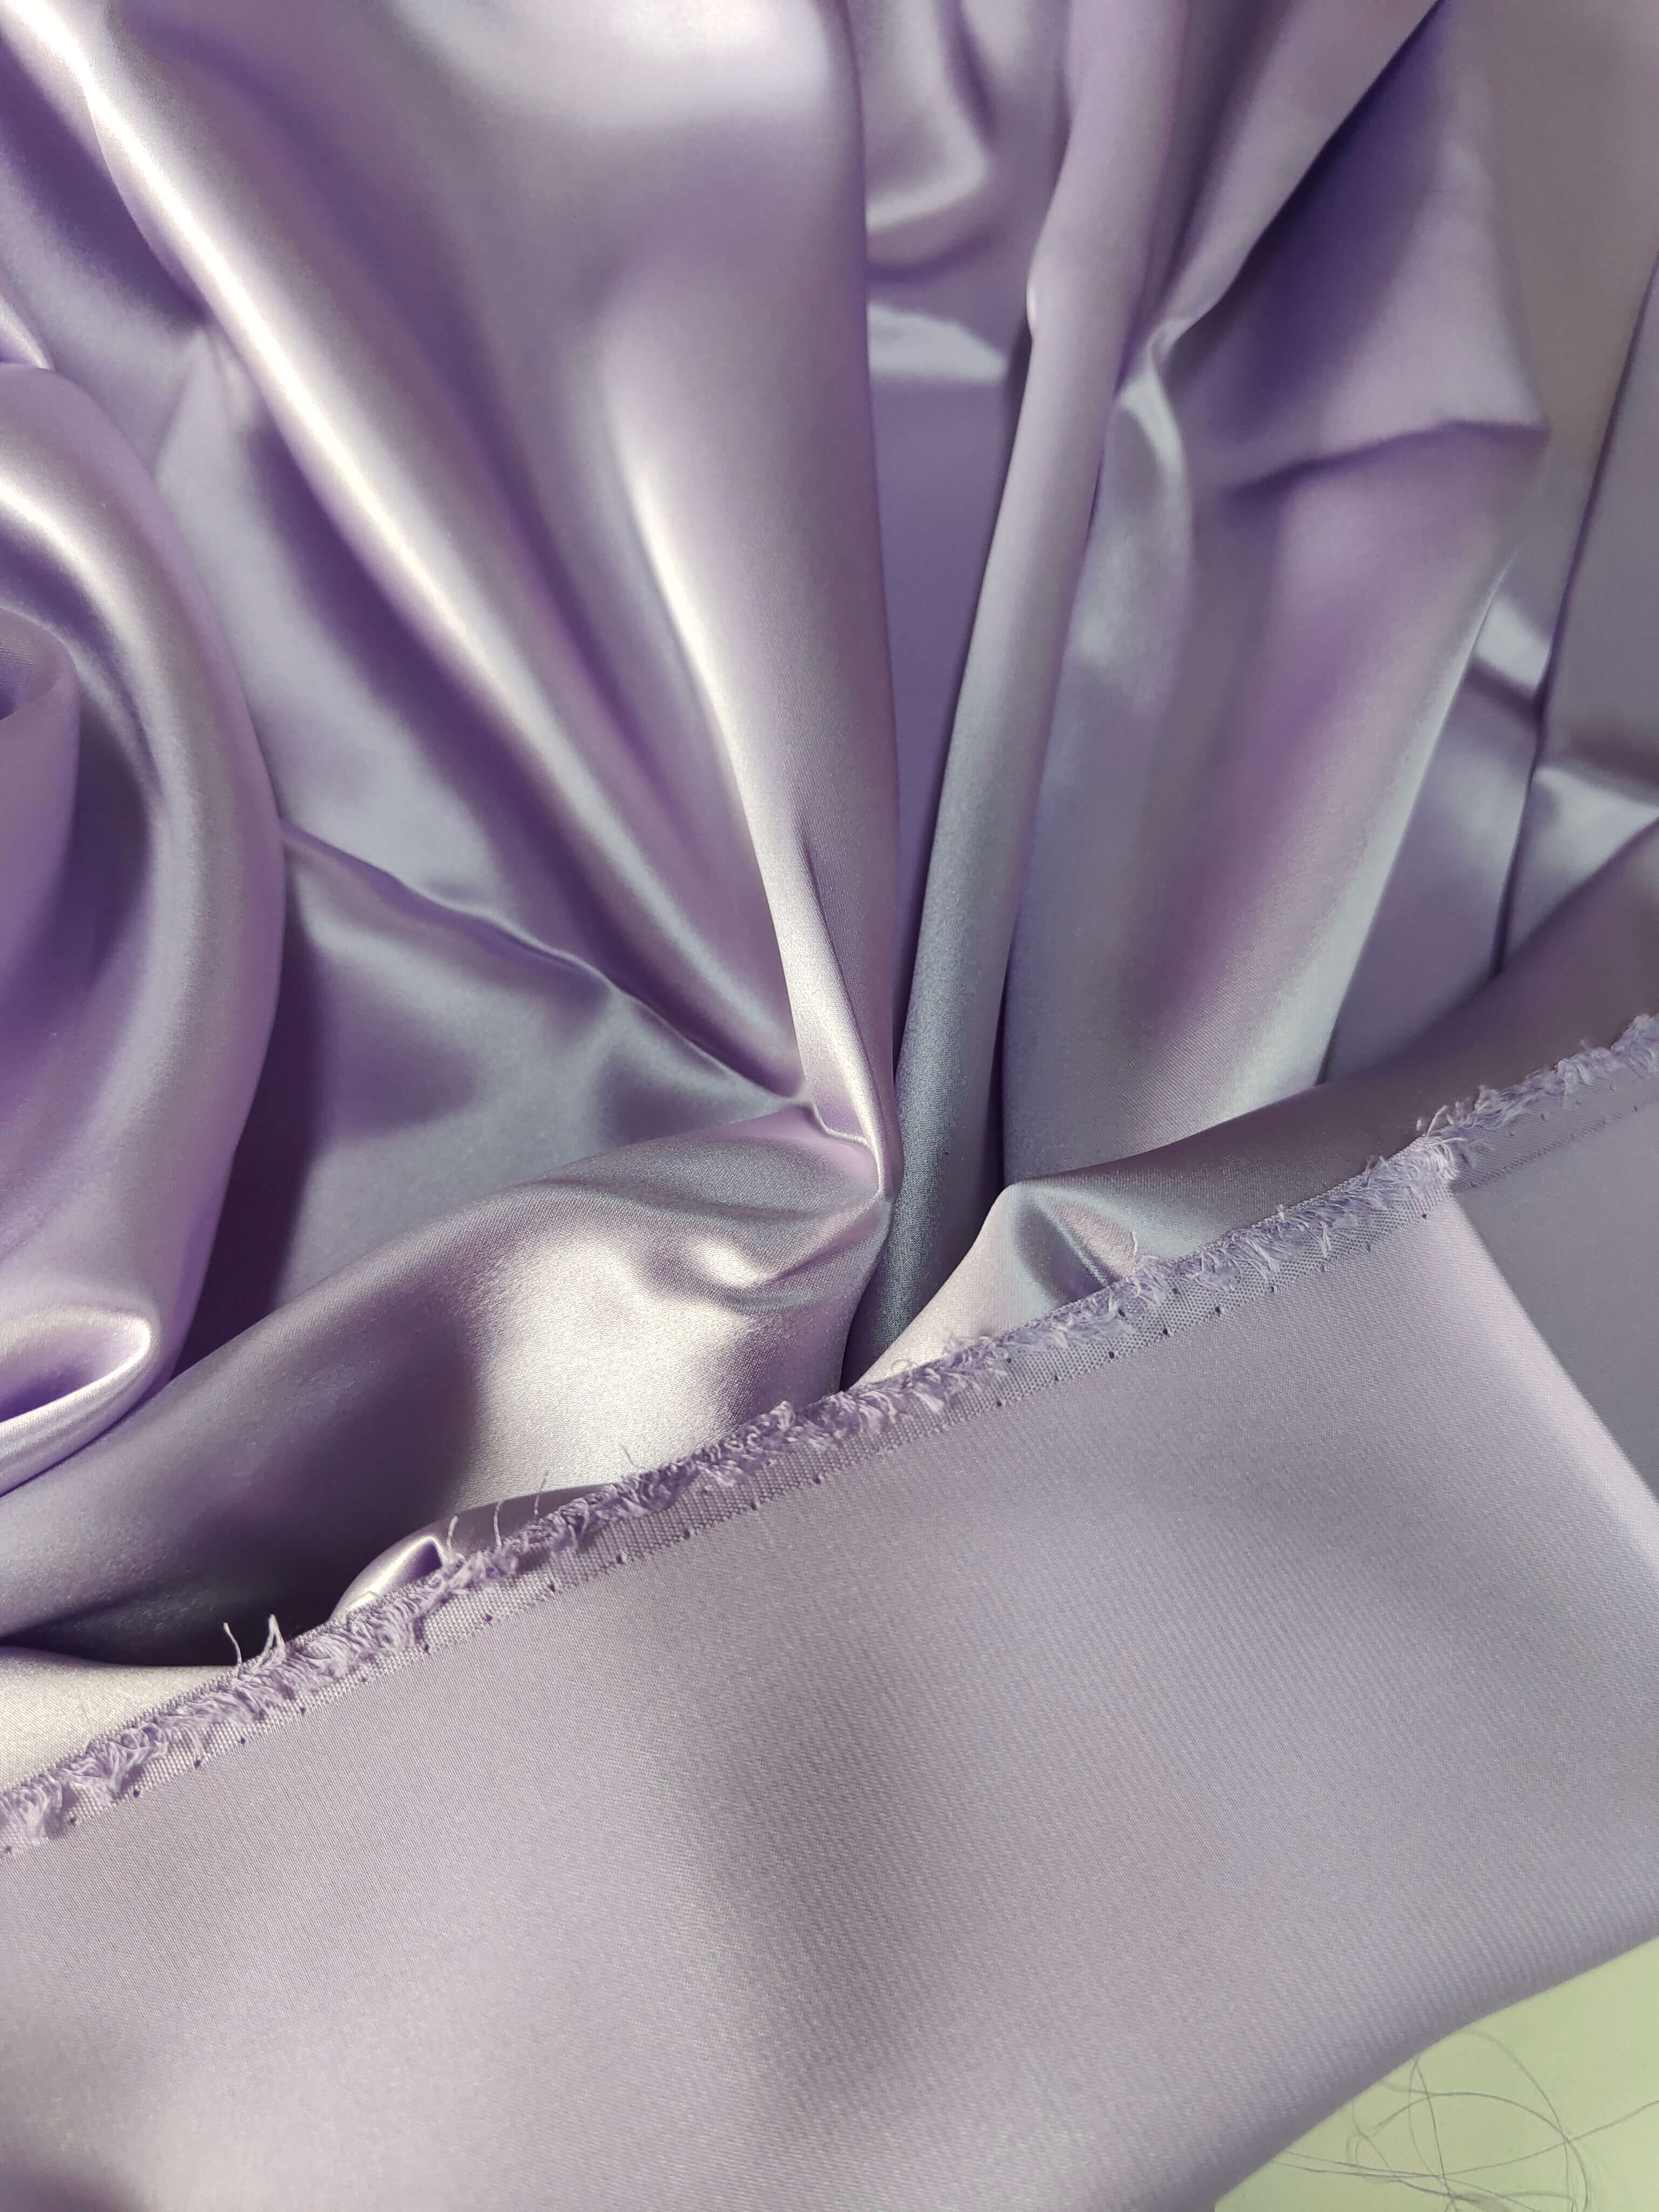 Custom Silk Fabric Mulberry silk fabric